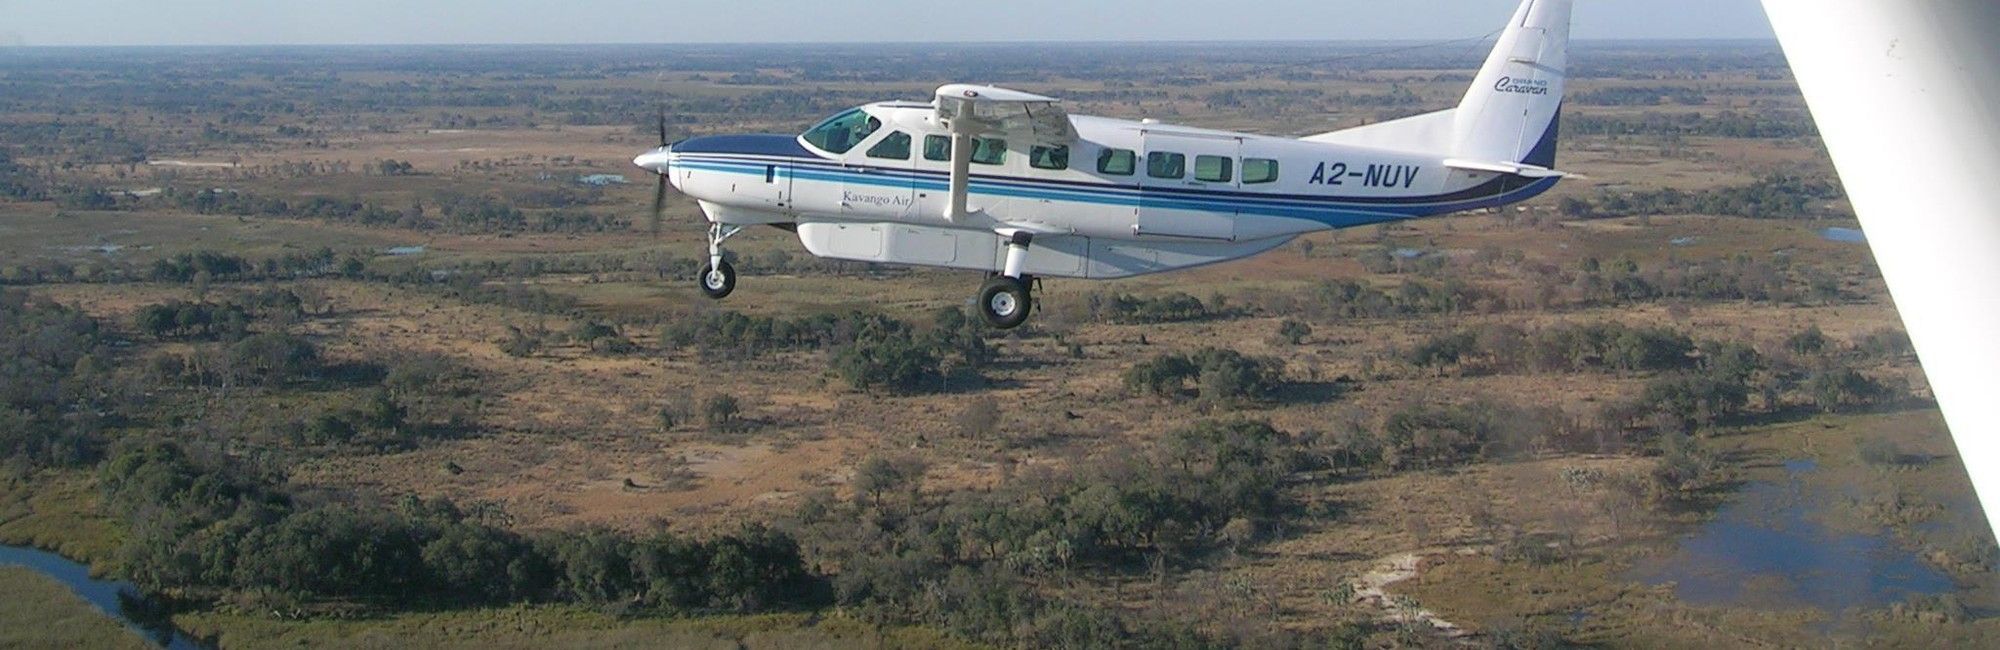 Fly-in safari